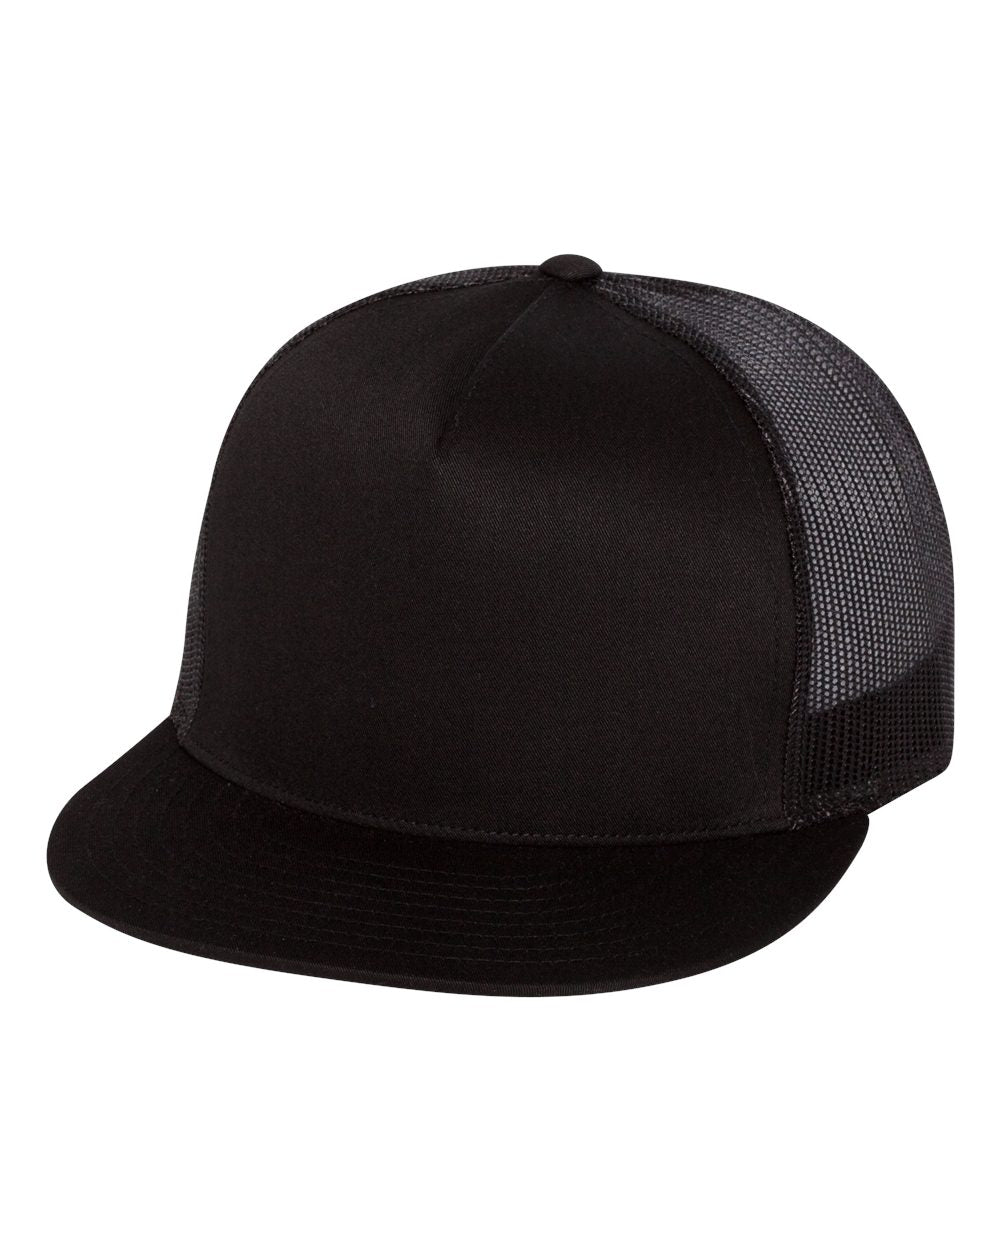 RX2 - 6006 (Black) Mesh Hat